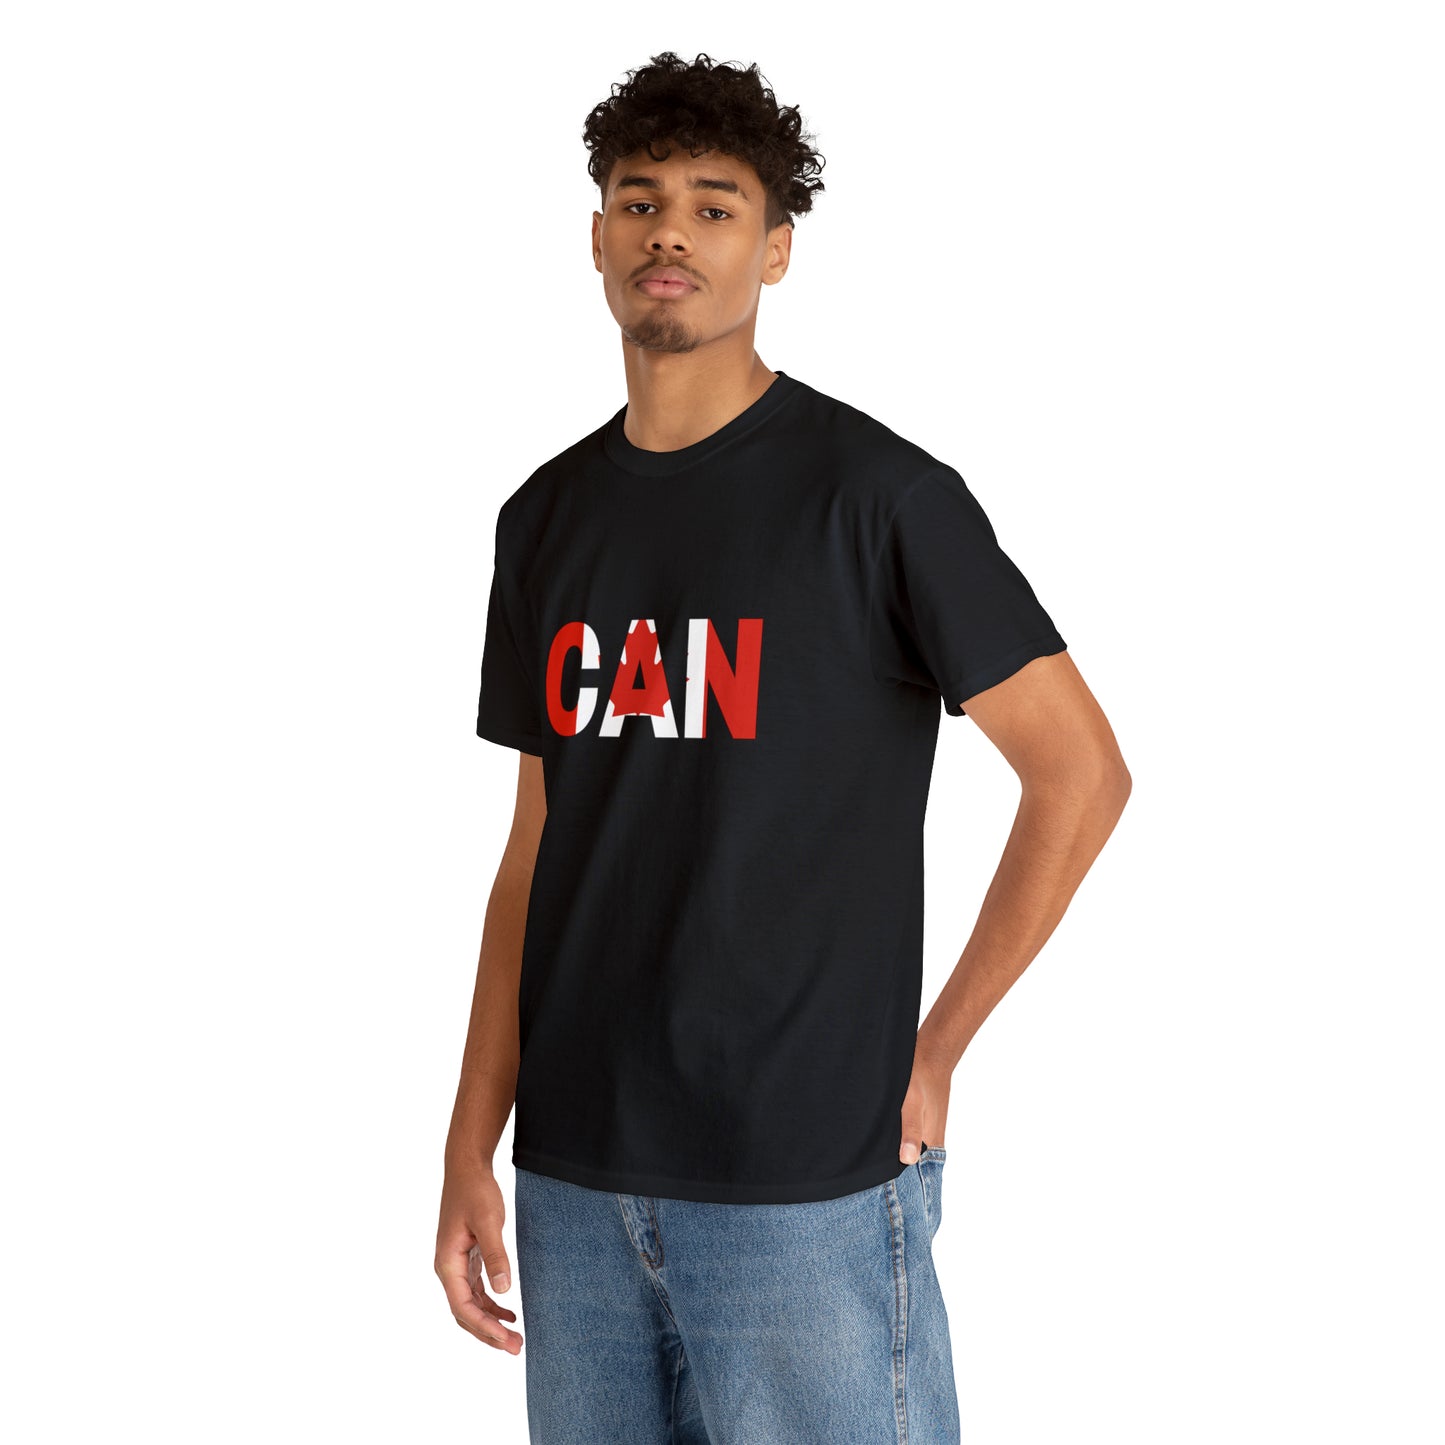 Canada By JDBexclusive..com